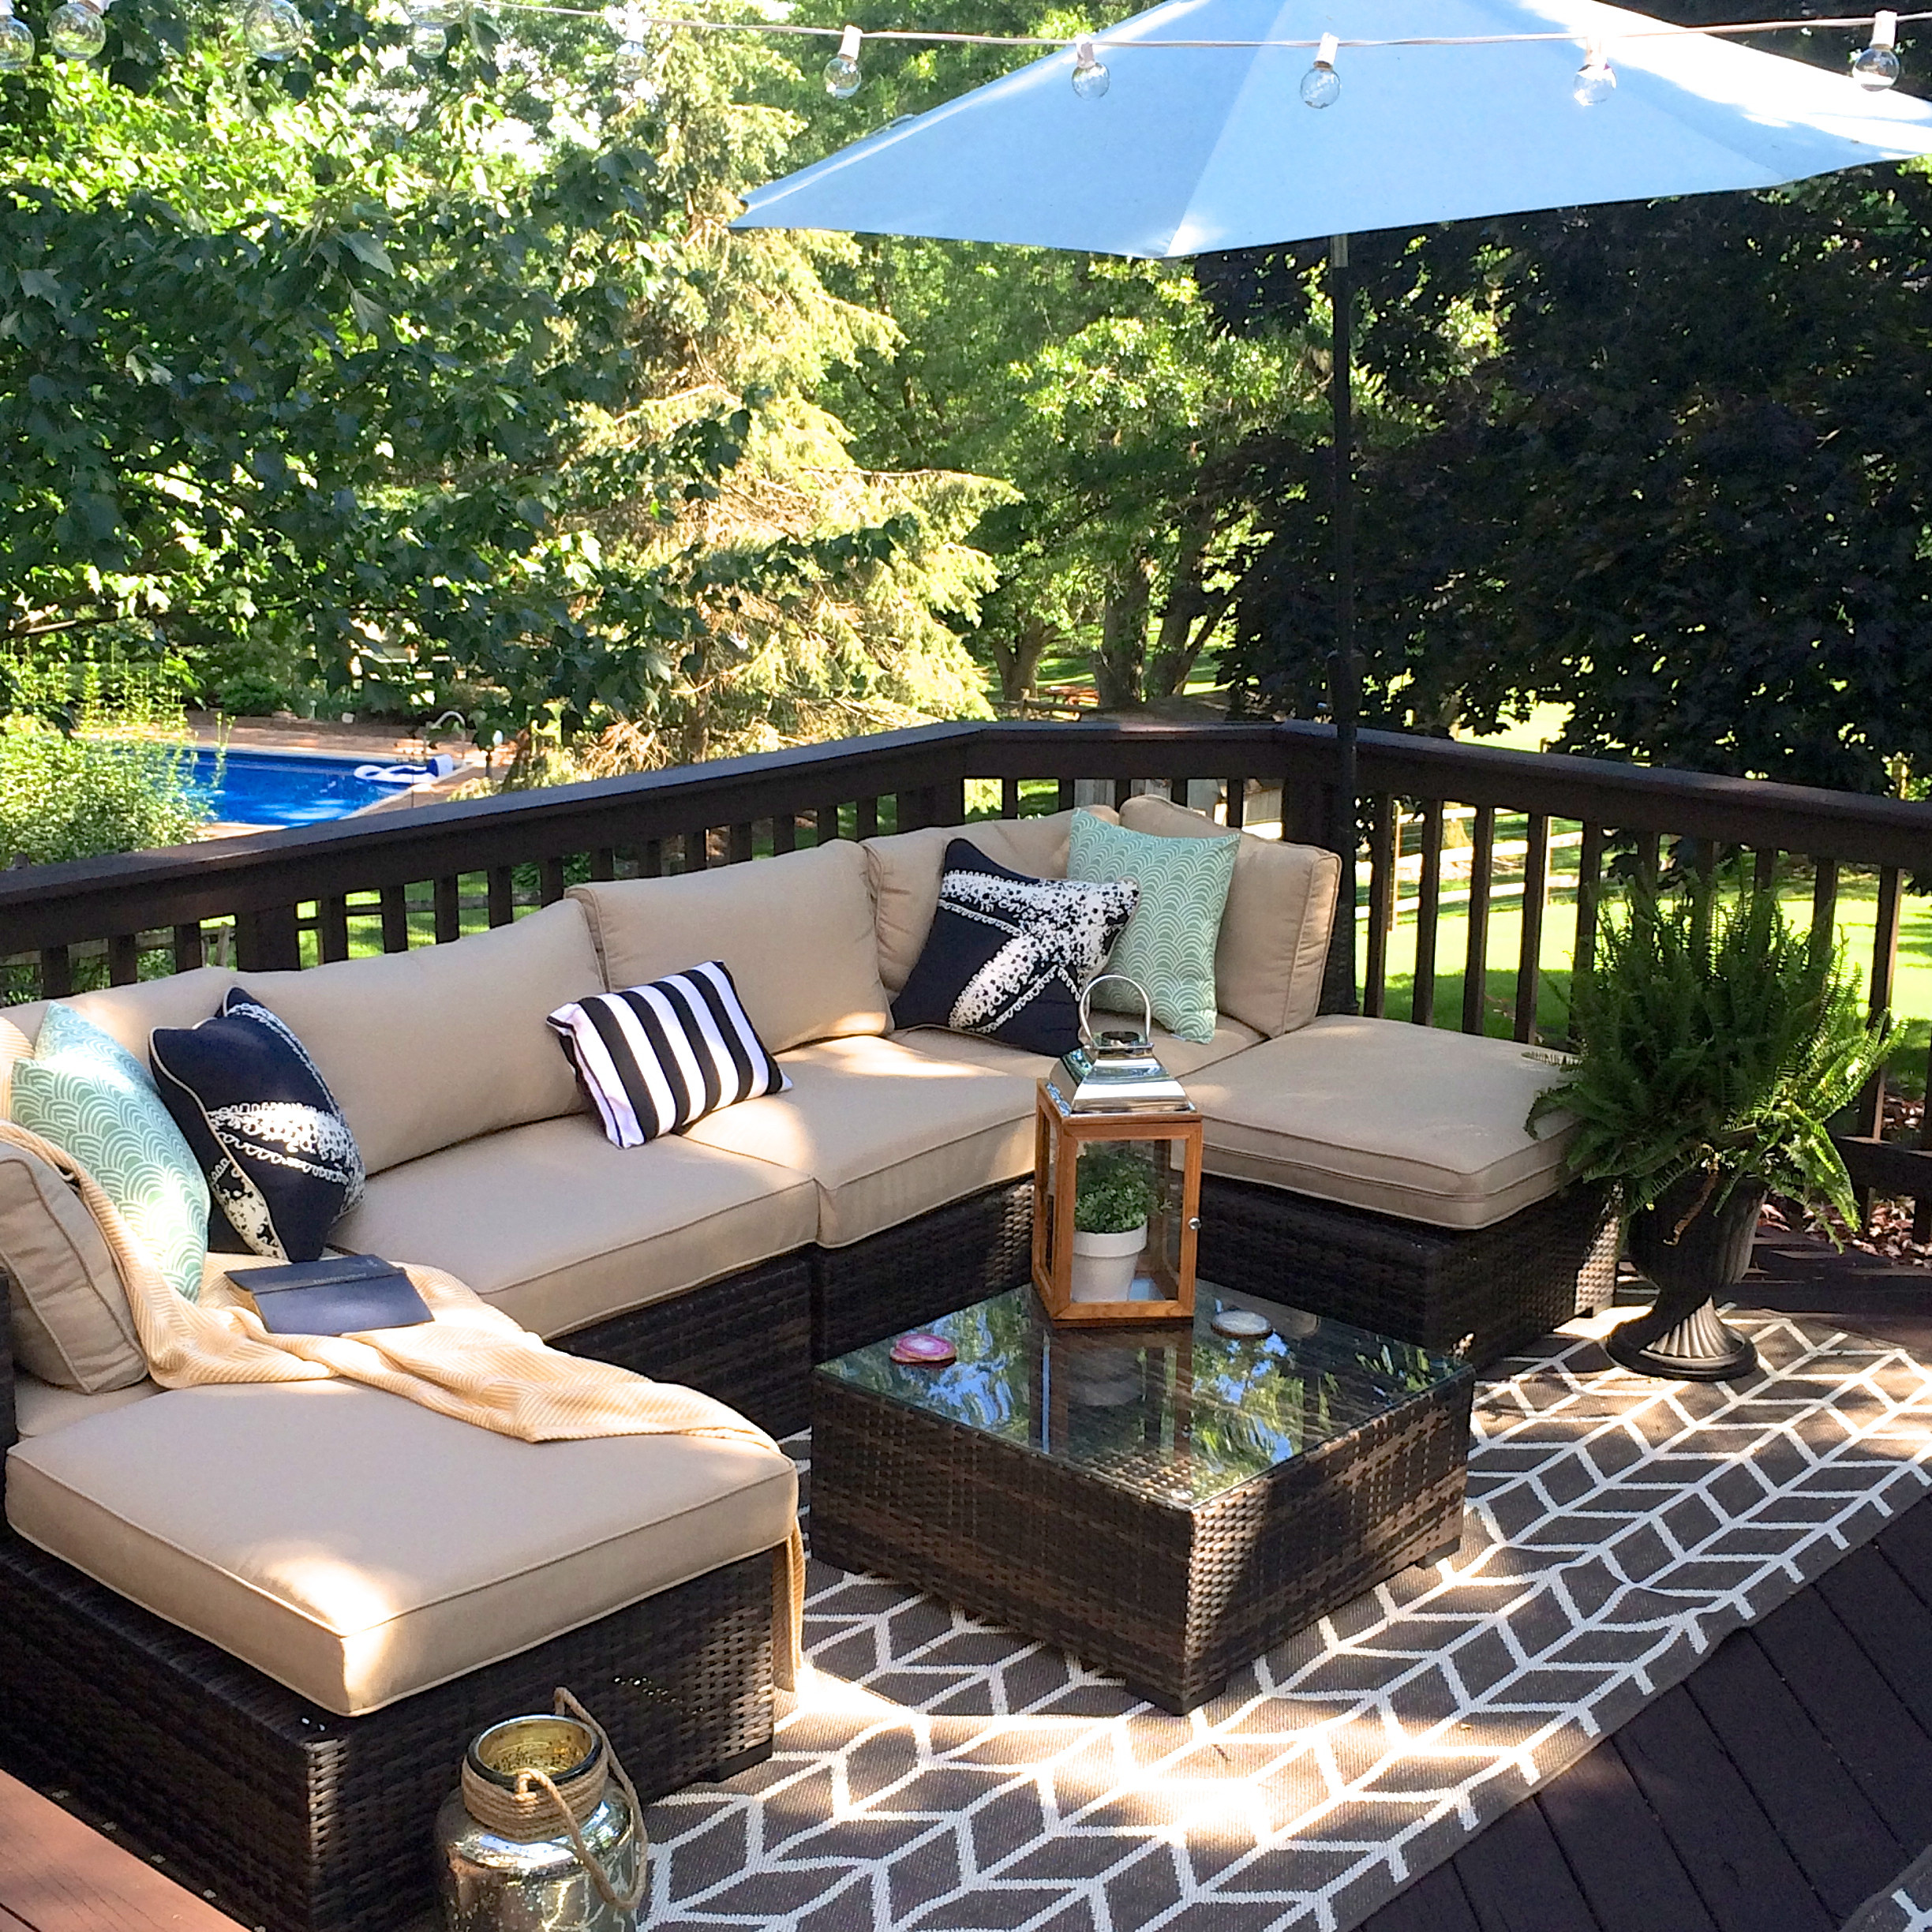 DIY Outdoor Decks
 Our Outdoor Living Room & DIY Deck Makeover Reveal